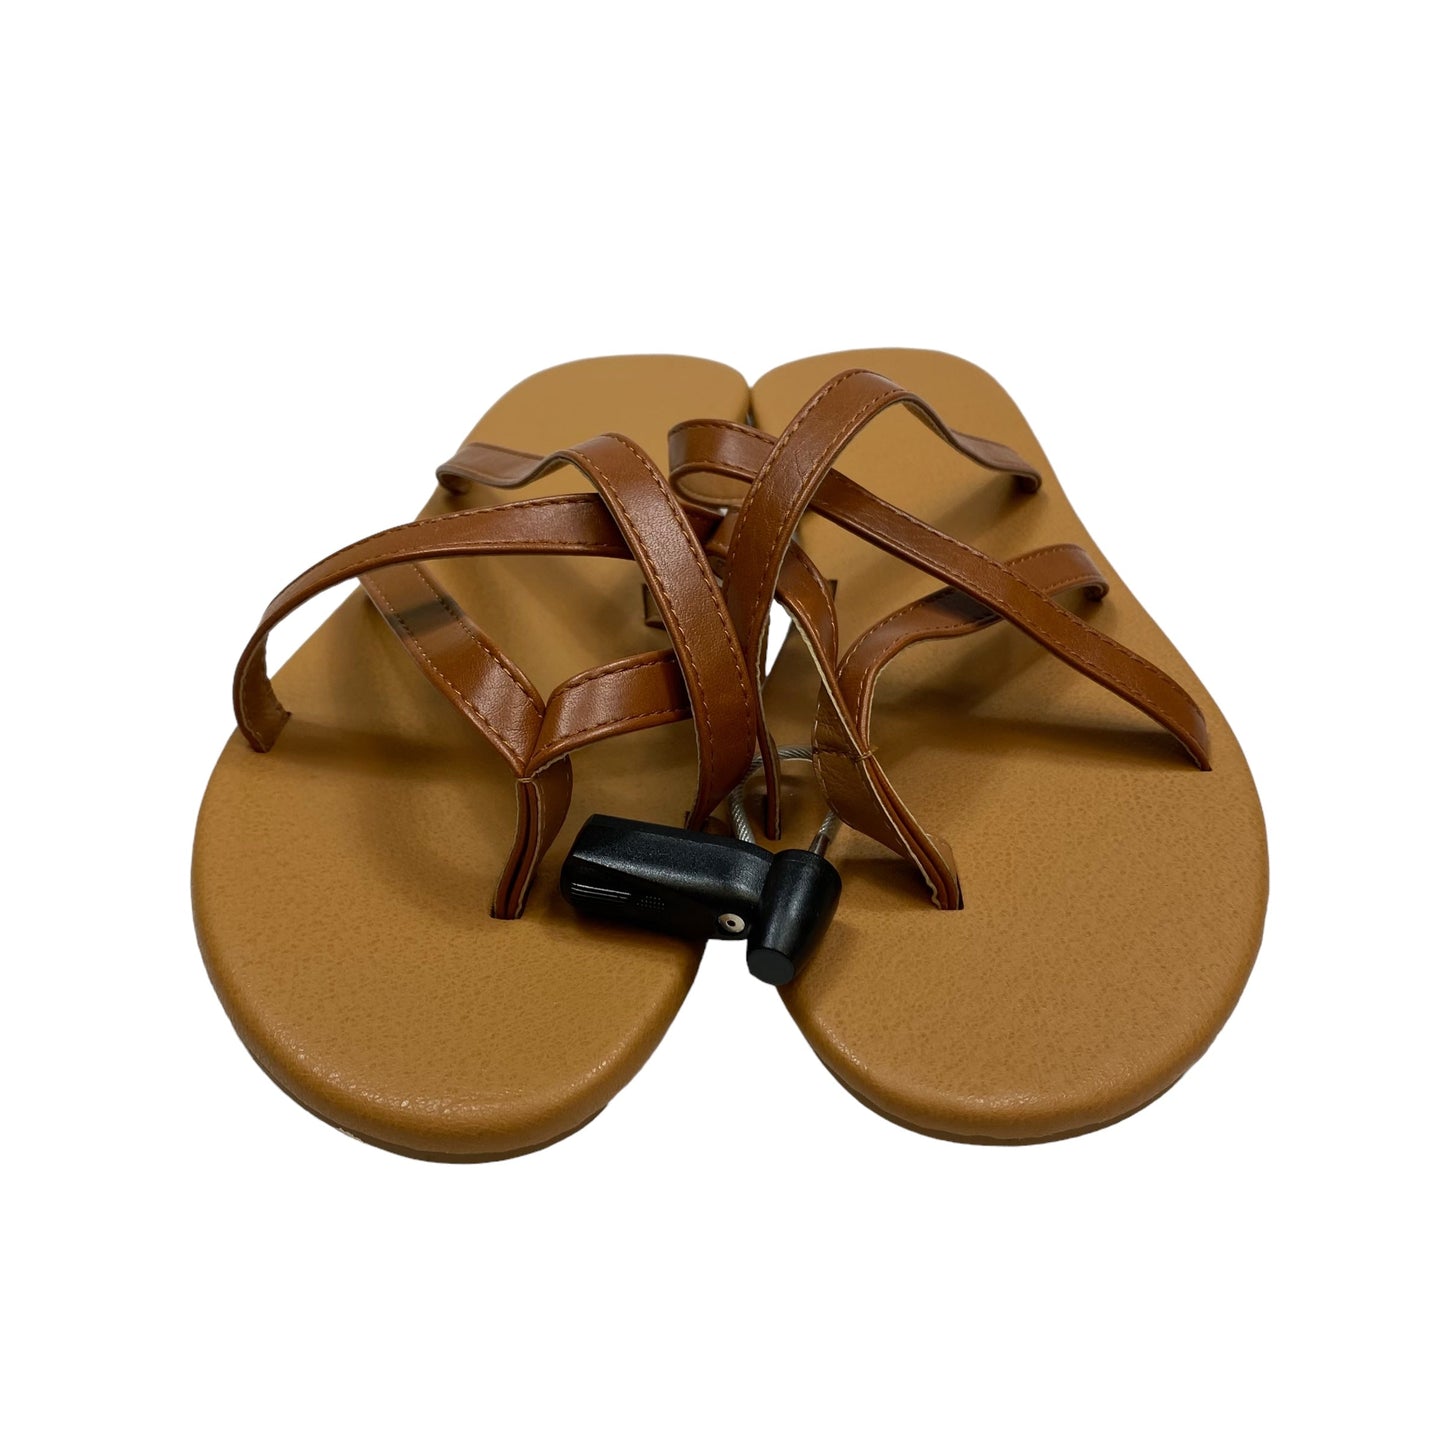 Brown Sandals Flip Flops Clothes Mentor, Size 12.5